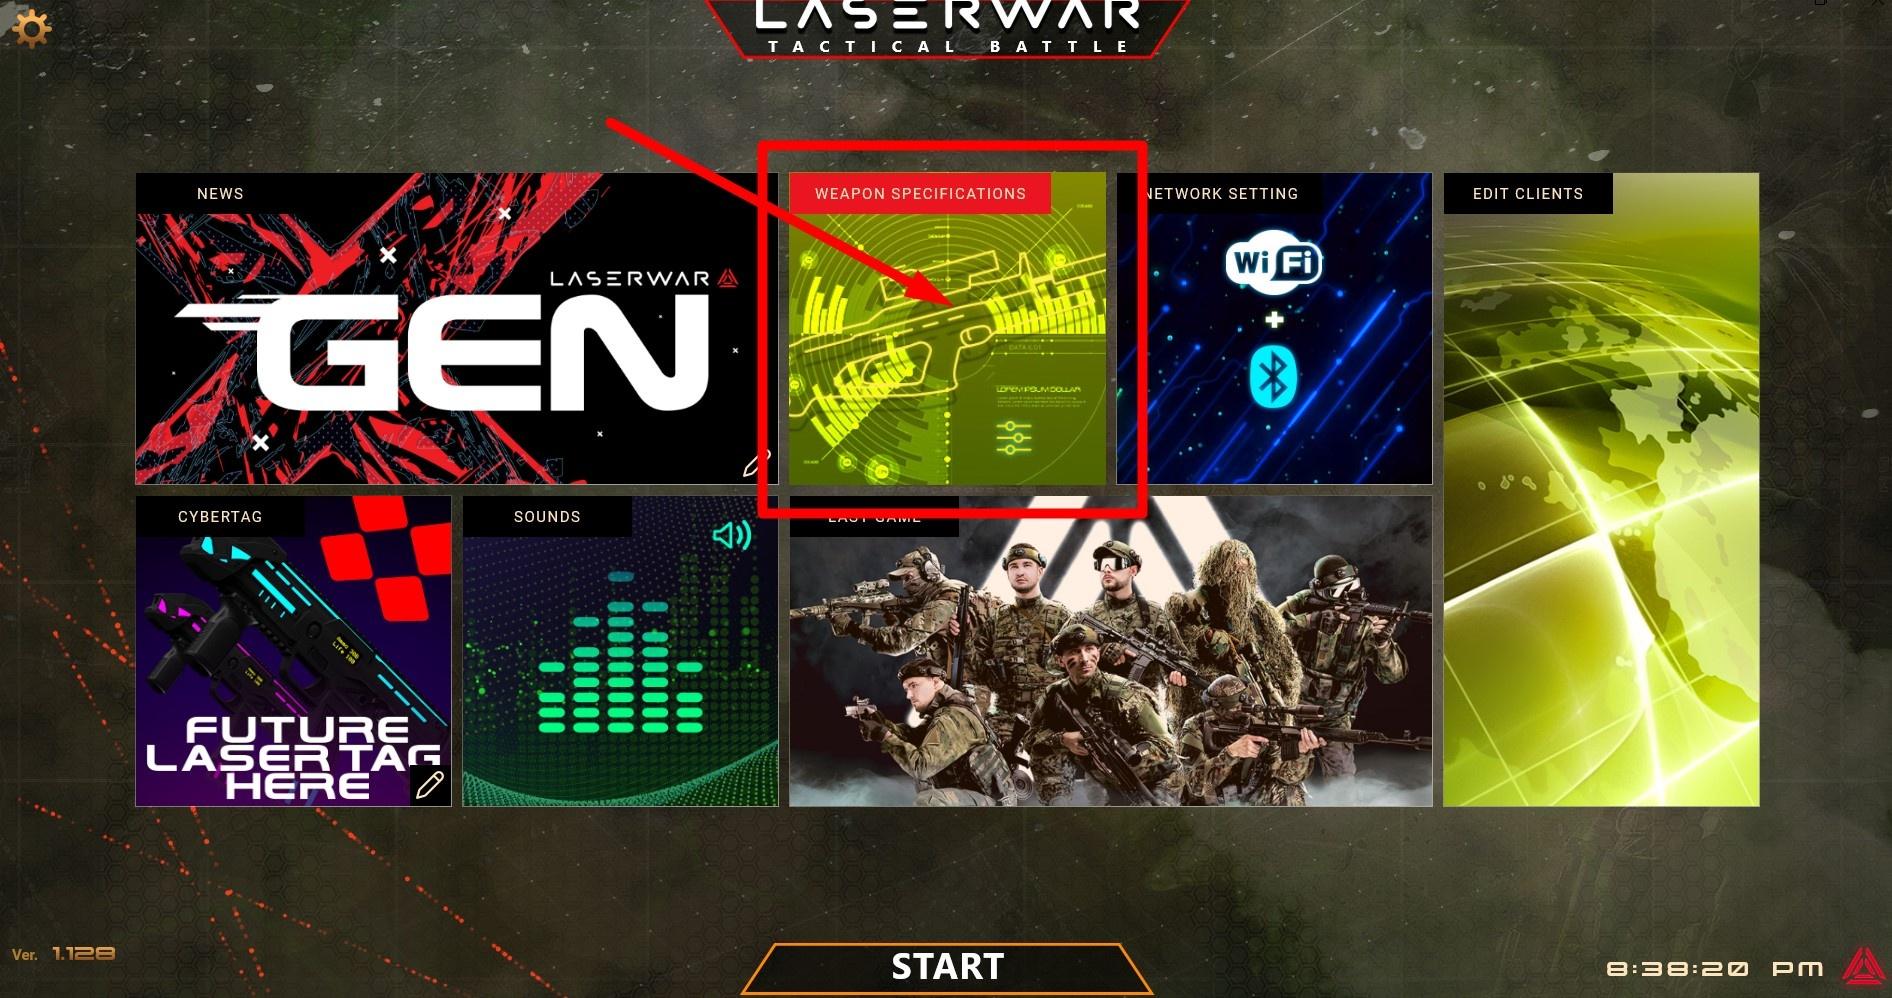 Laserwar Gun firmware update for X-generation